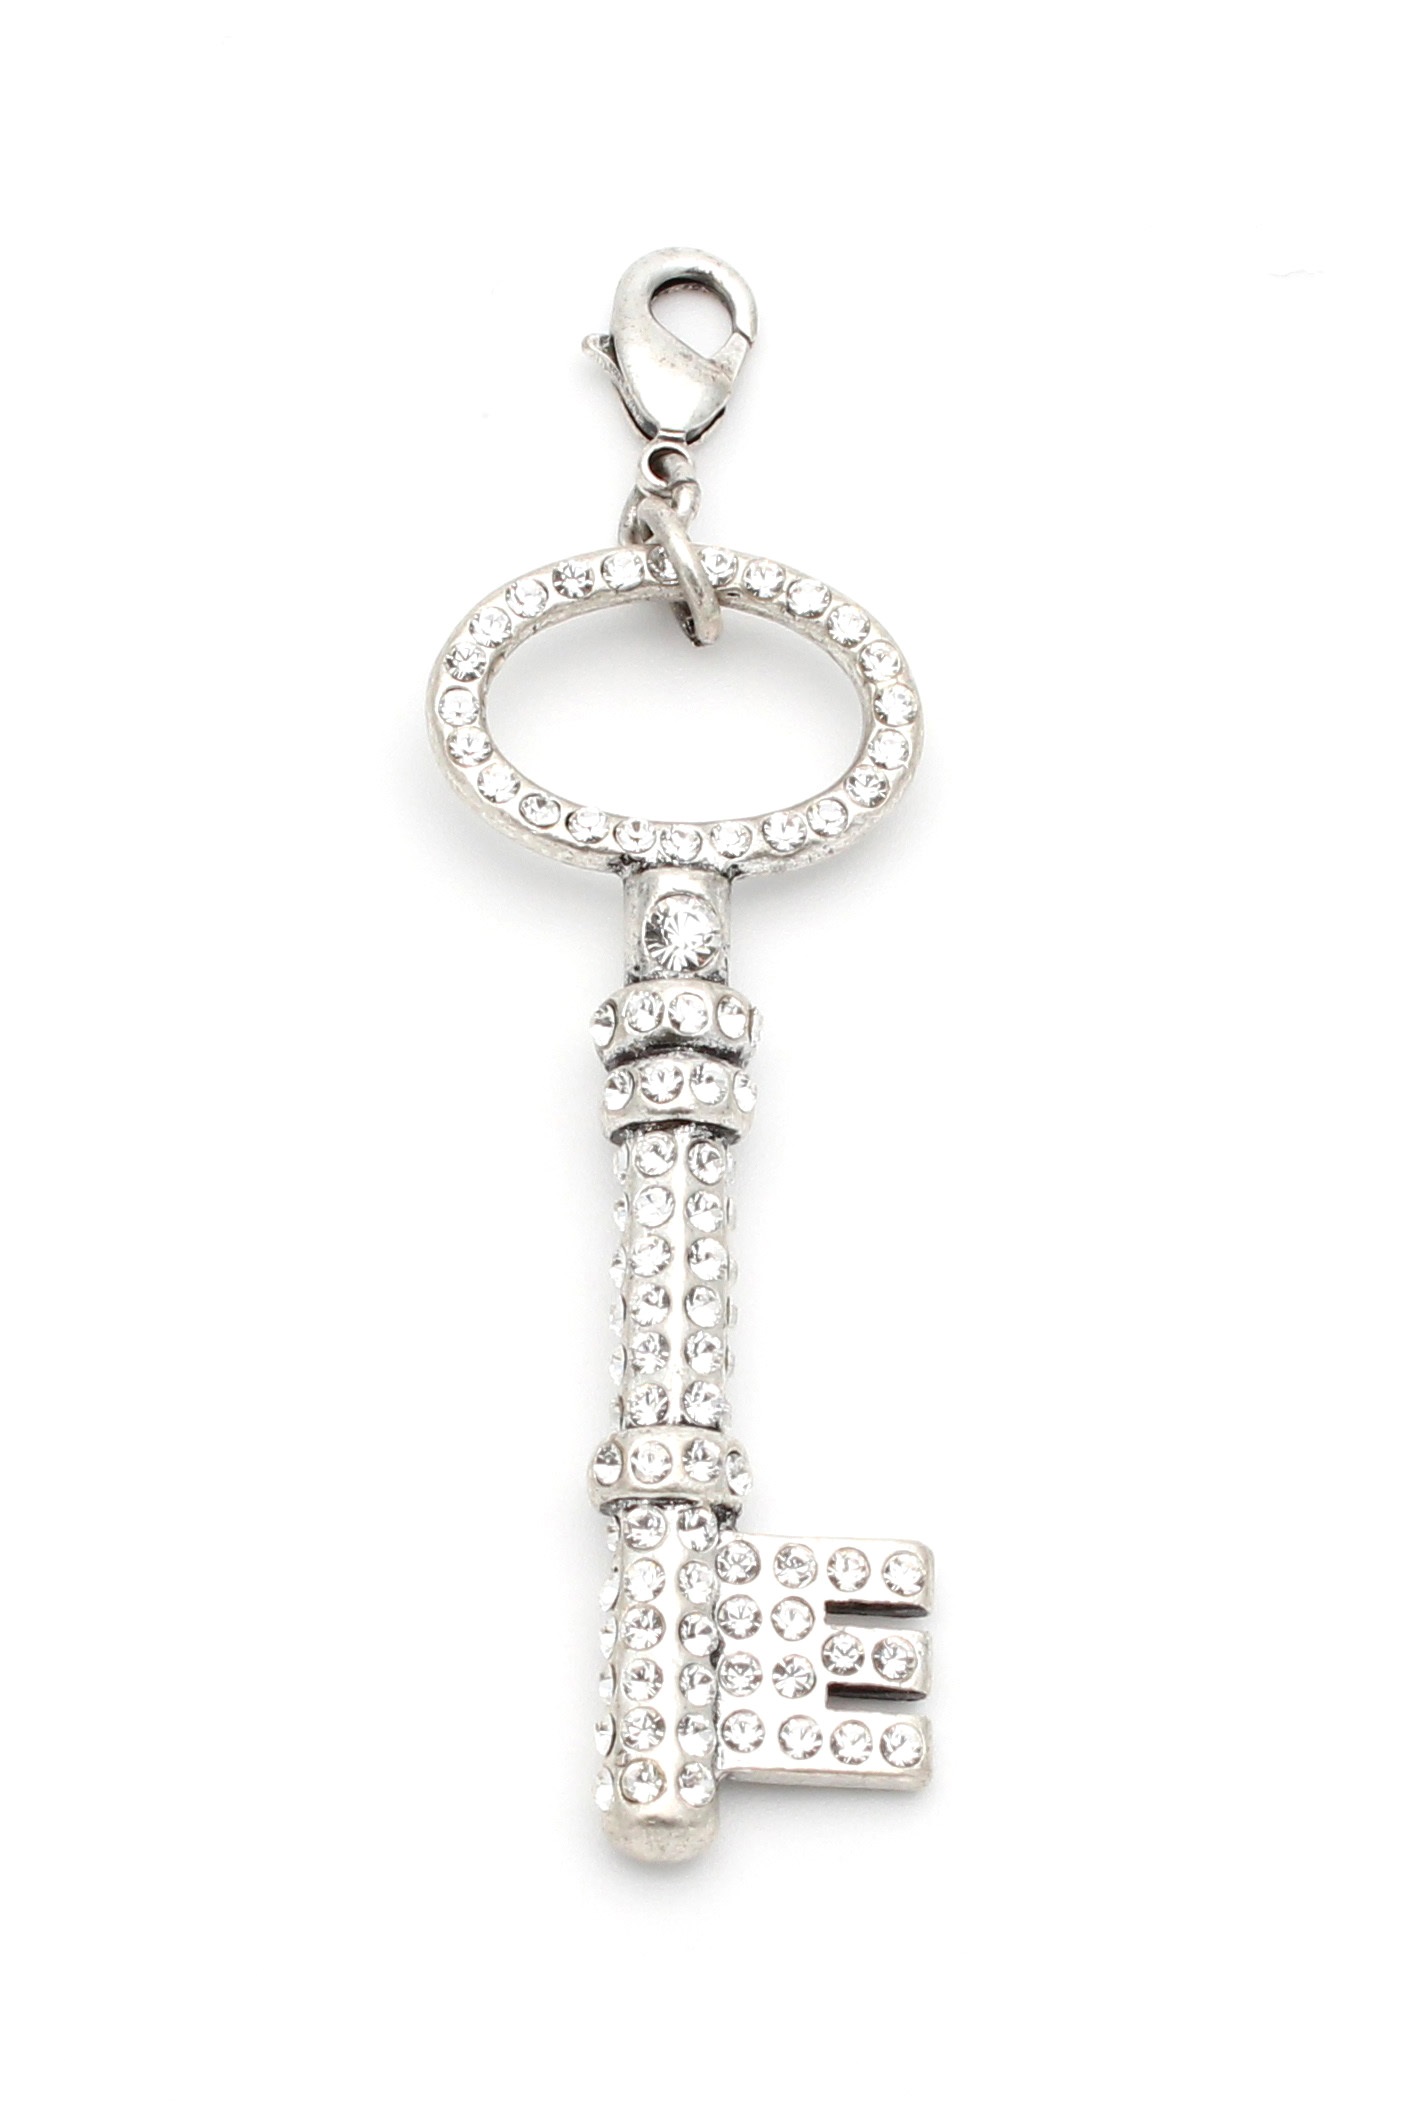 Pilgrim Charm - Large Size Swarovski Crystal Key Oxidised Silver & Clear